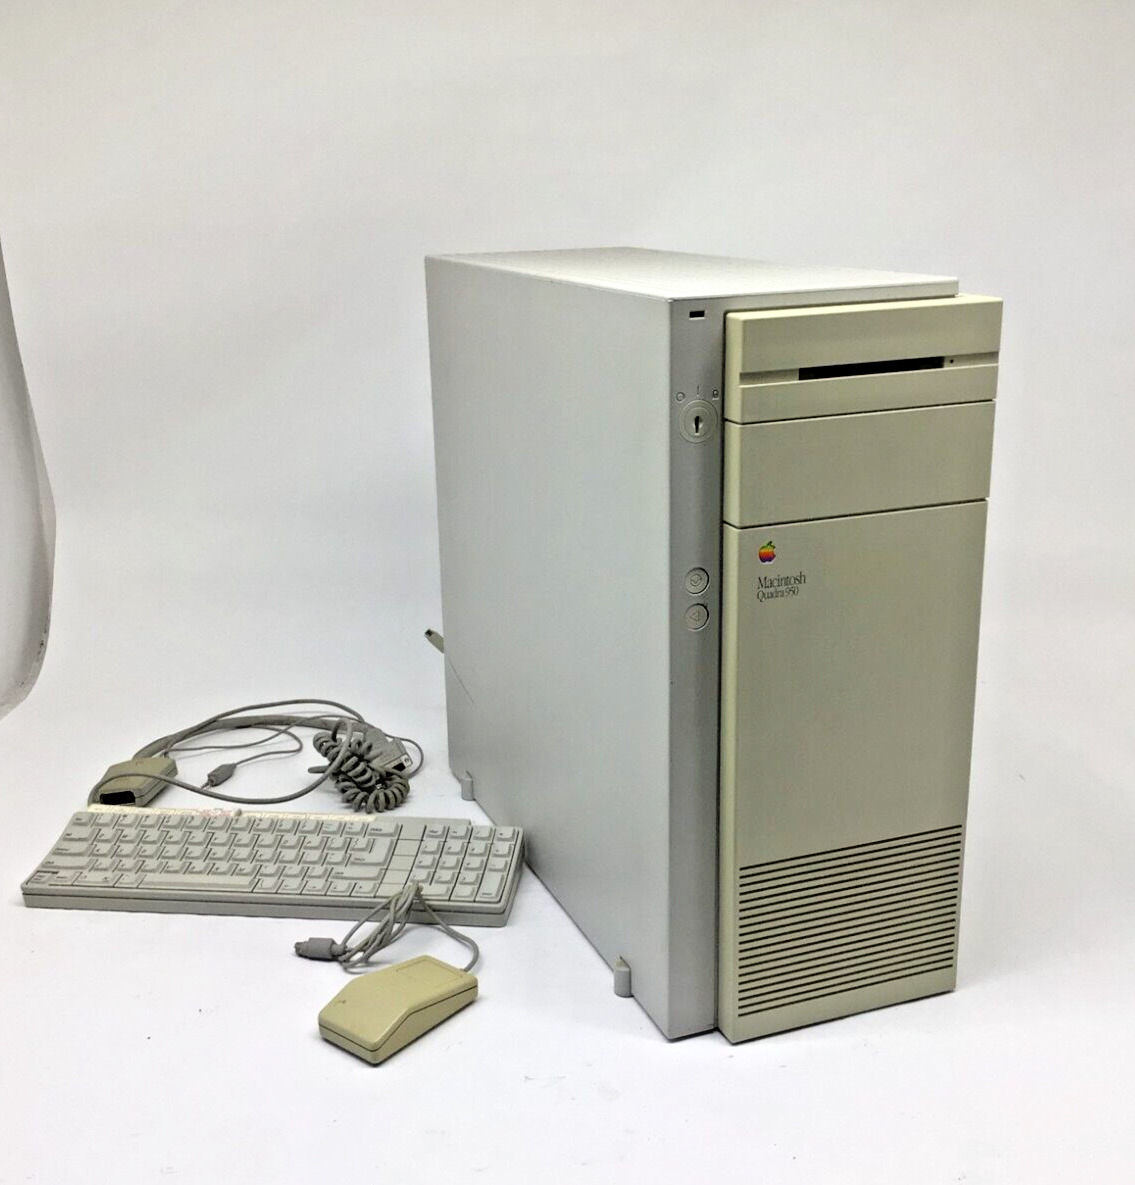 Apple Macintosh Quadra 950 M4300 w/ Original Software, Keys, Keyboard, & Mouse